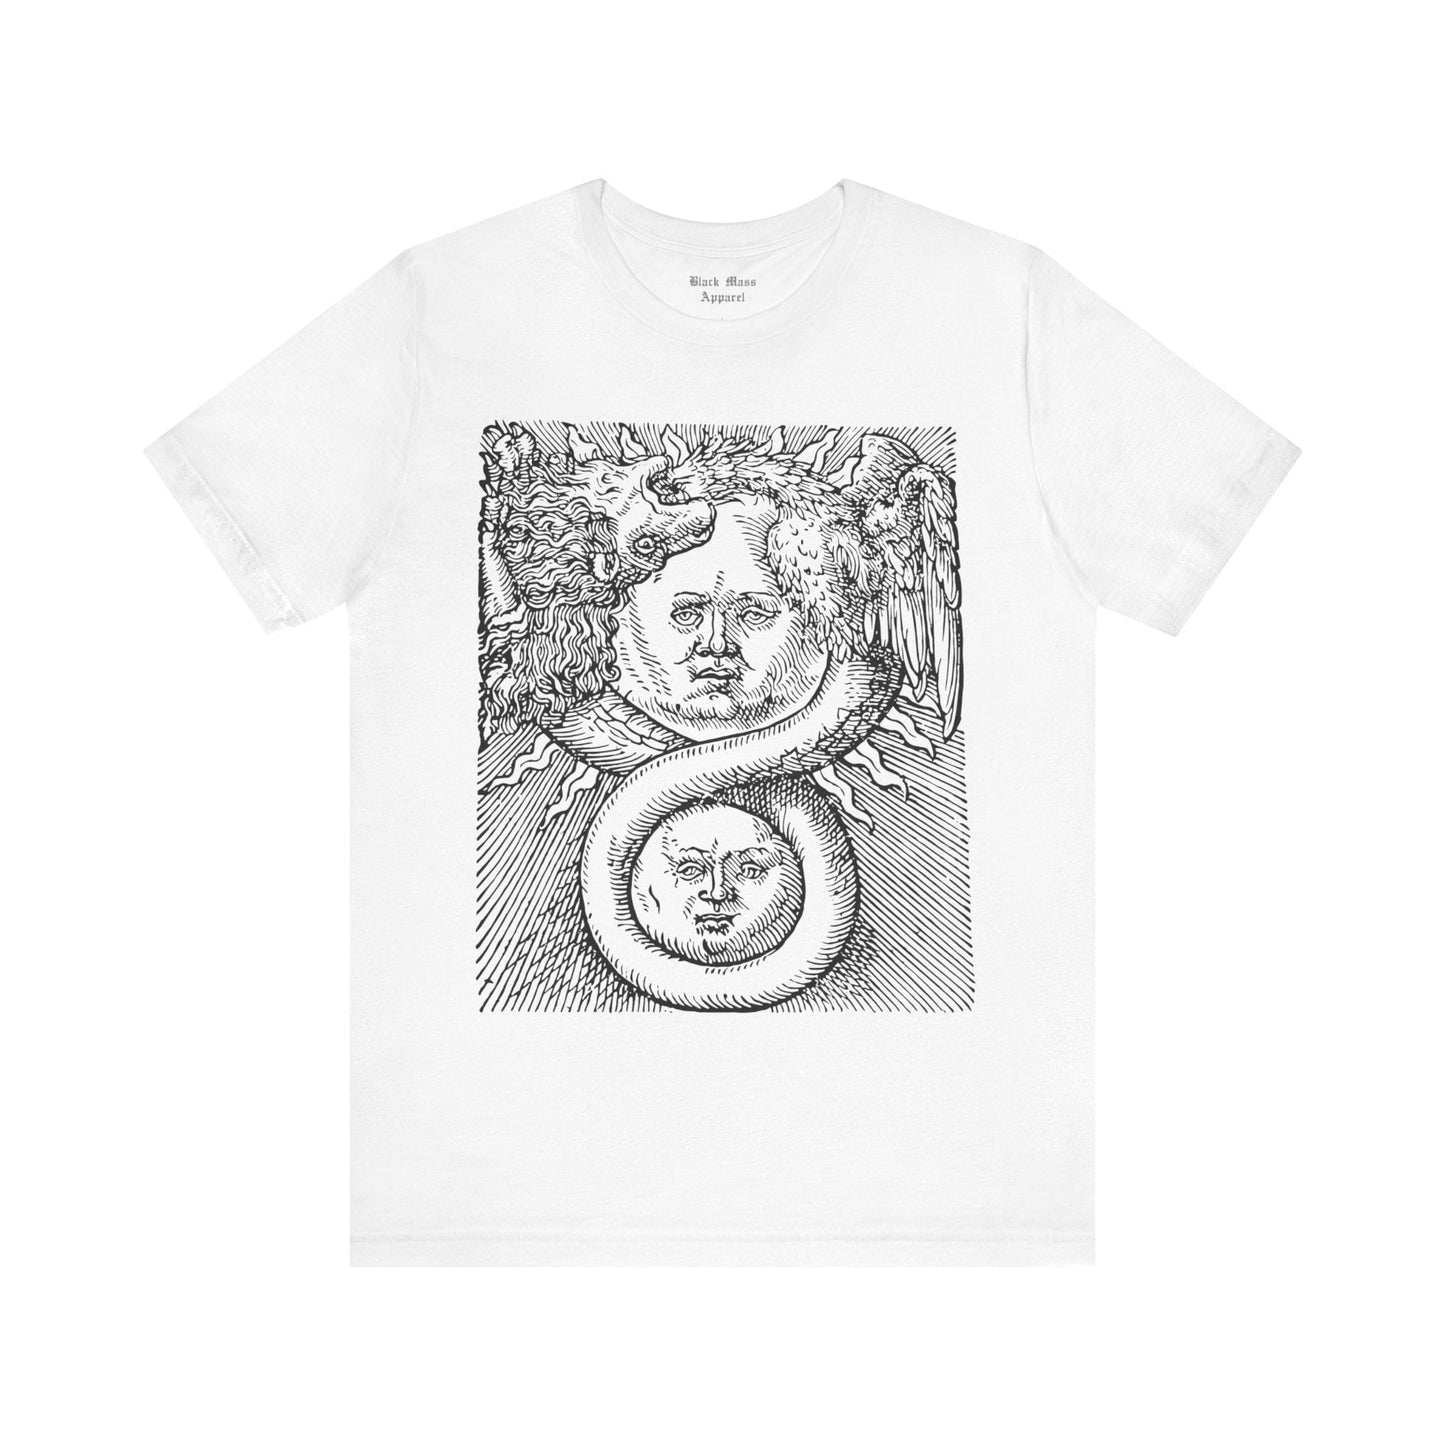 Sun and Moon - Black Mass Apparel - T-Shirt